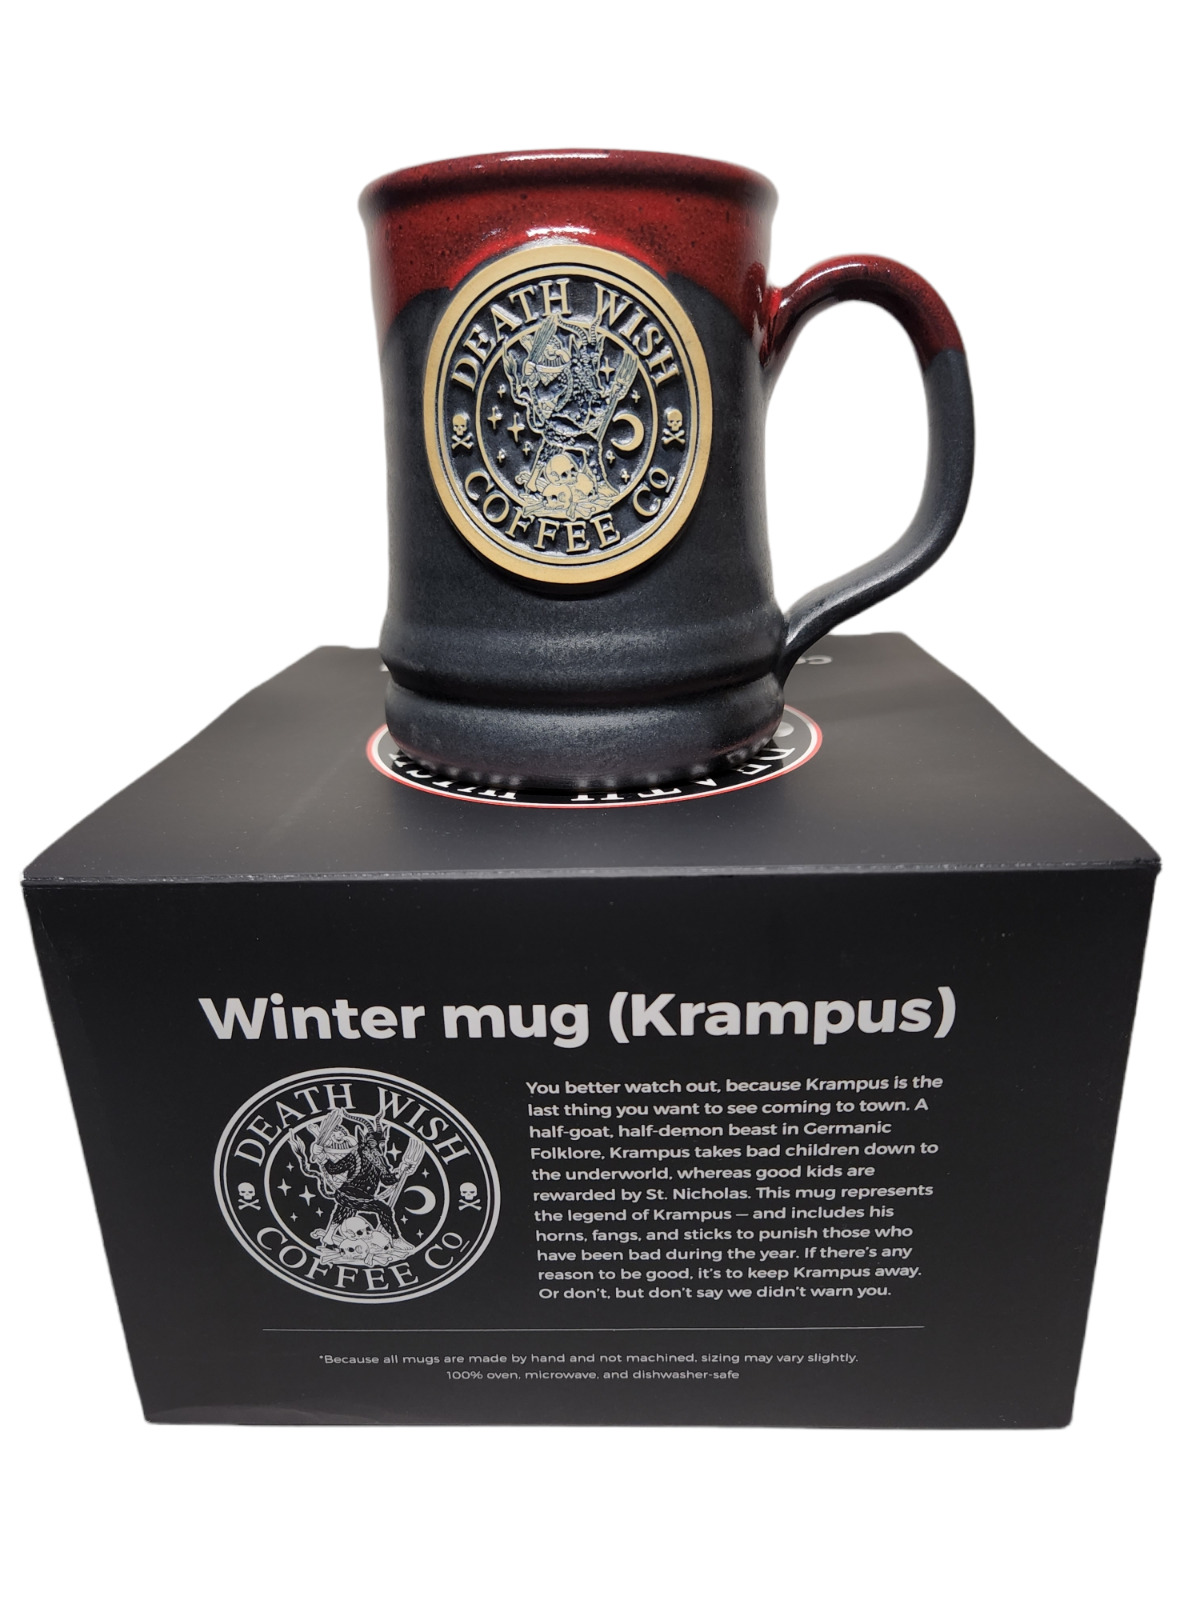 Death Wish Coffee Krampus Mug Deneen Pottery #2073/3666